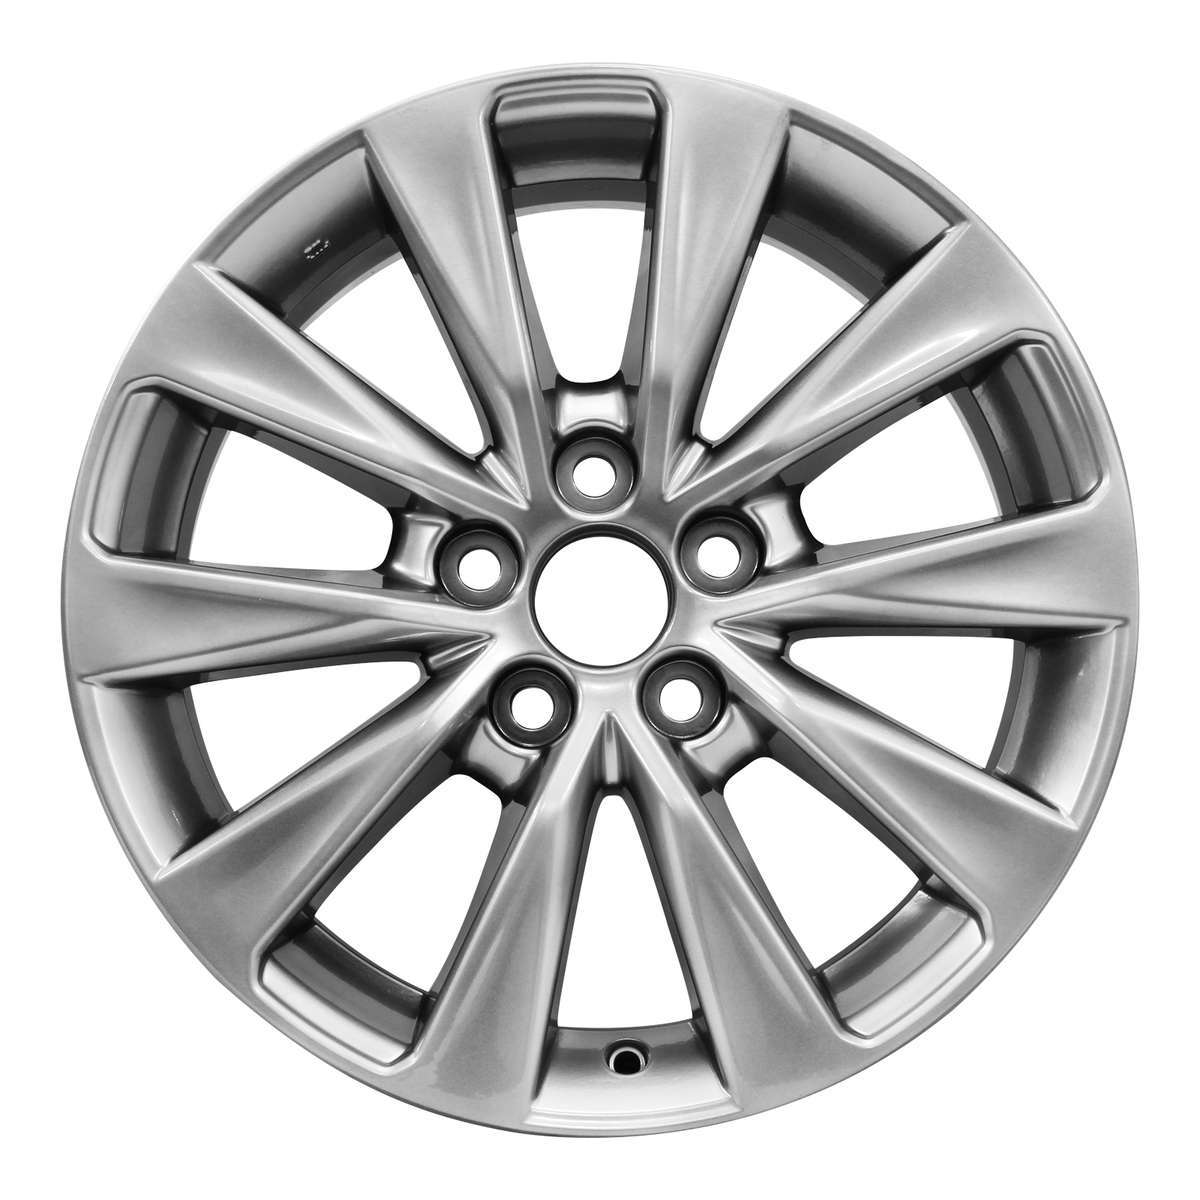 2015 Toyota Camry New 17" Replacement Wheel Rim RW75170H